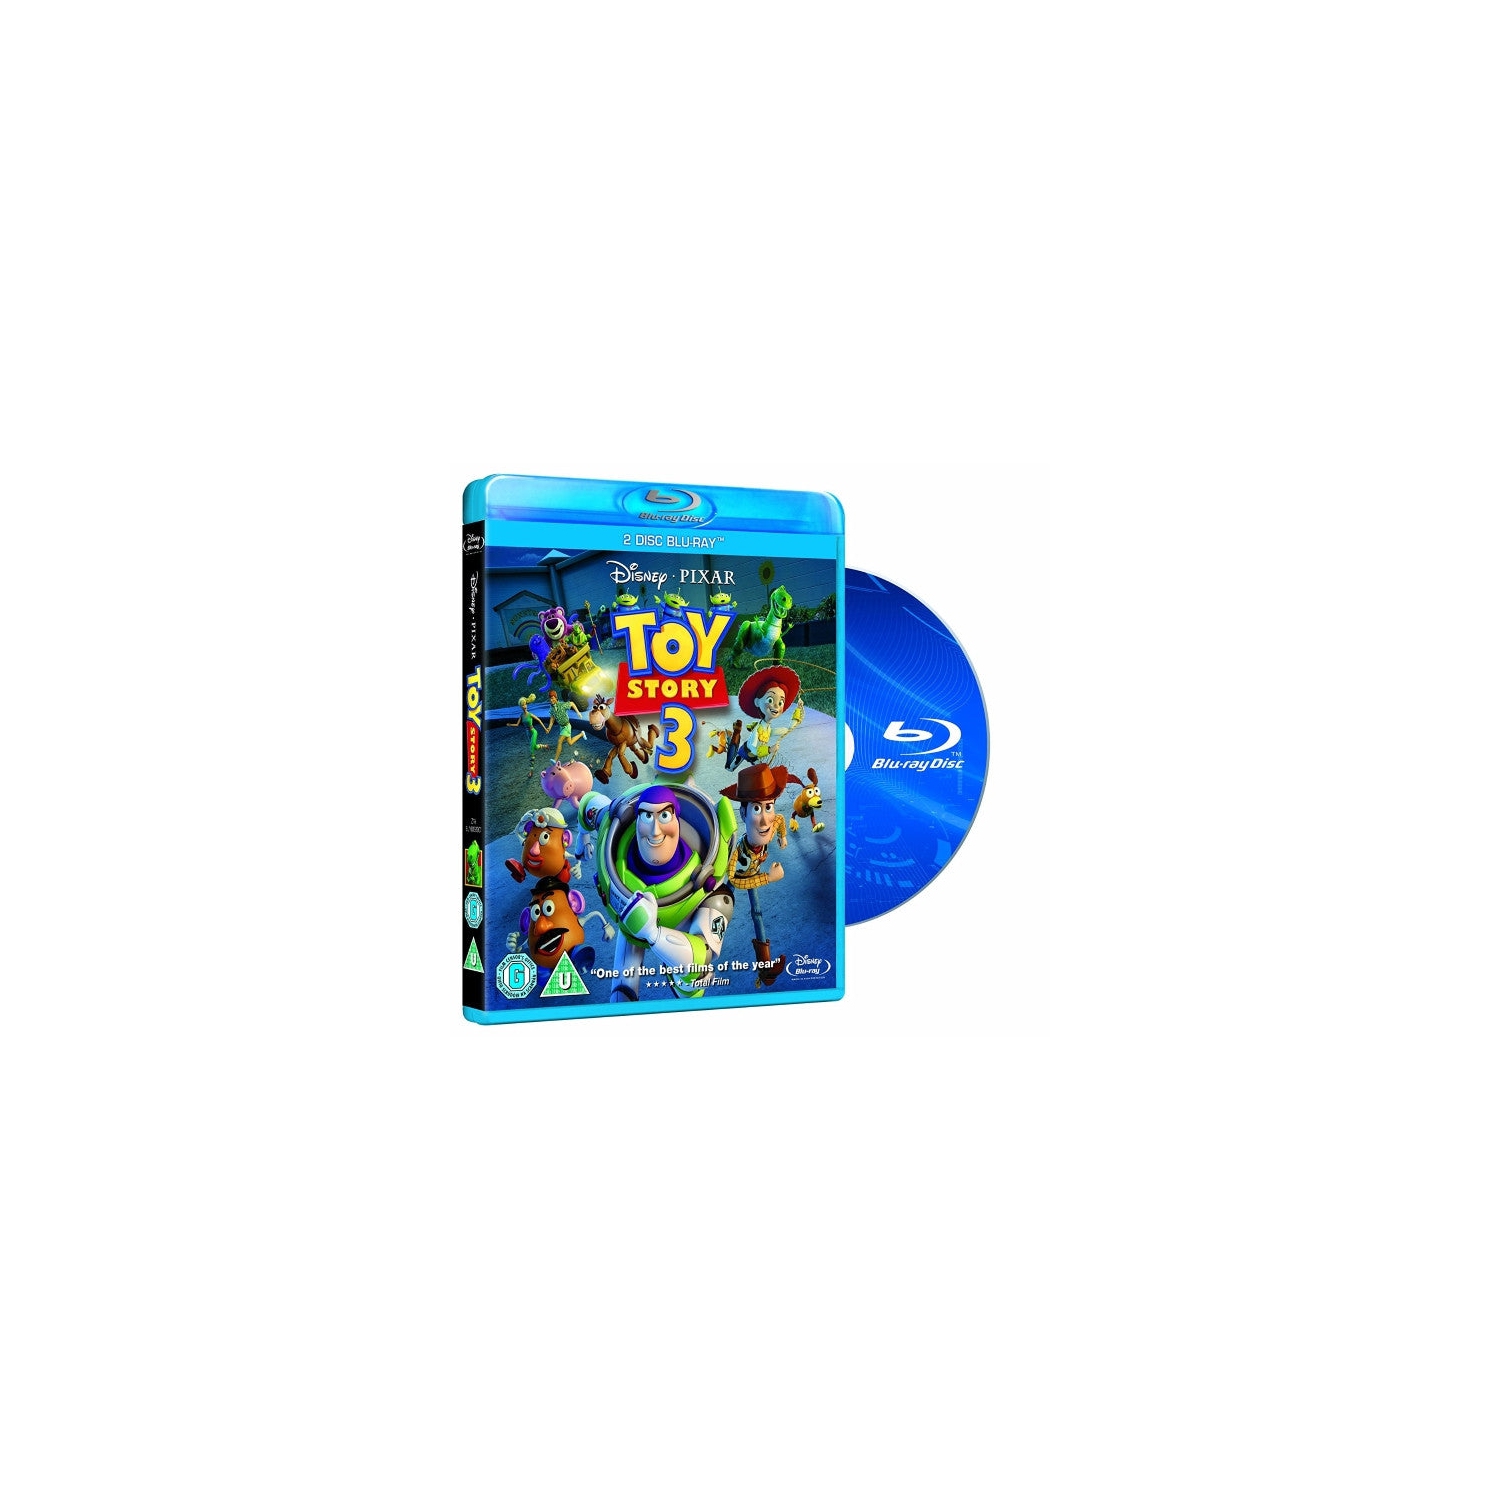 Disney Pixar Toy Story 3 [Blu-Ray]